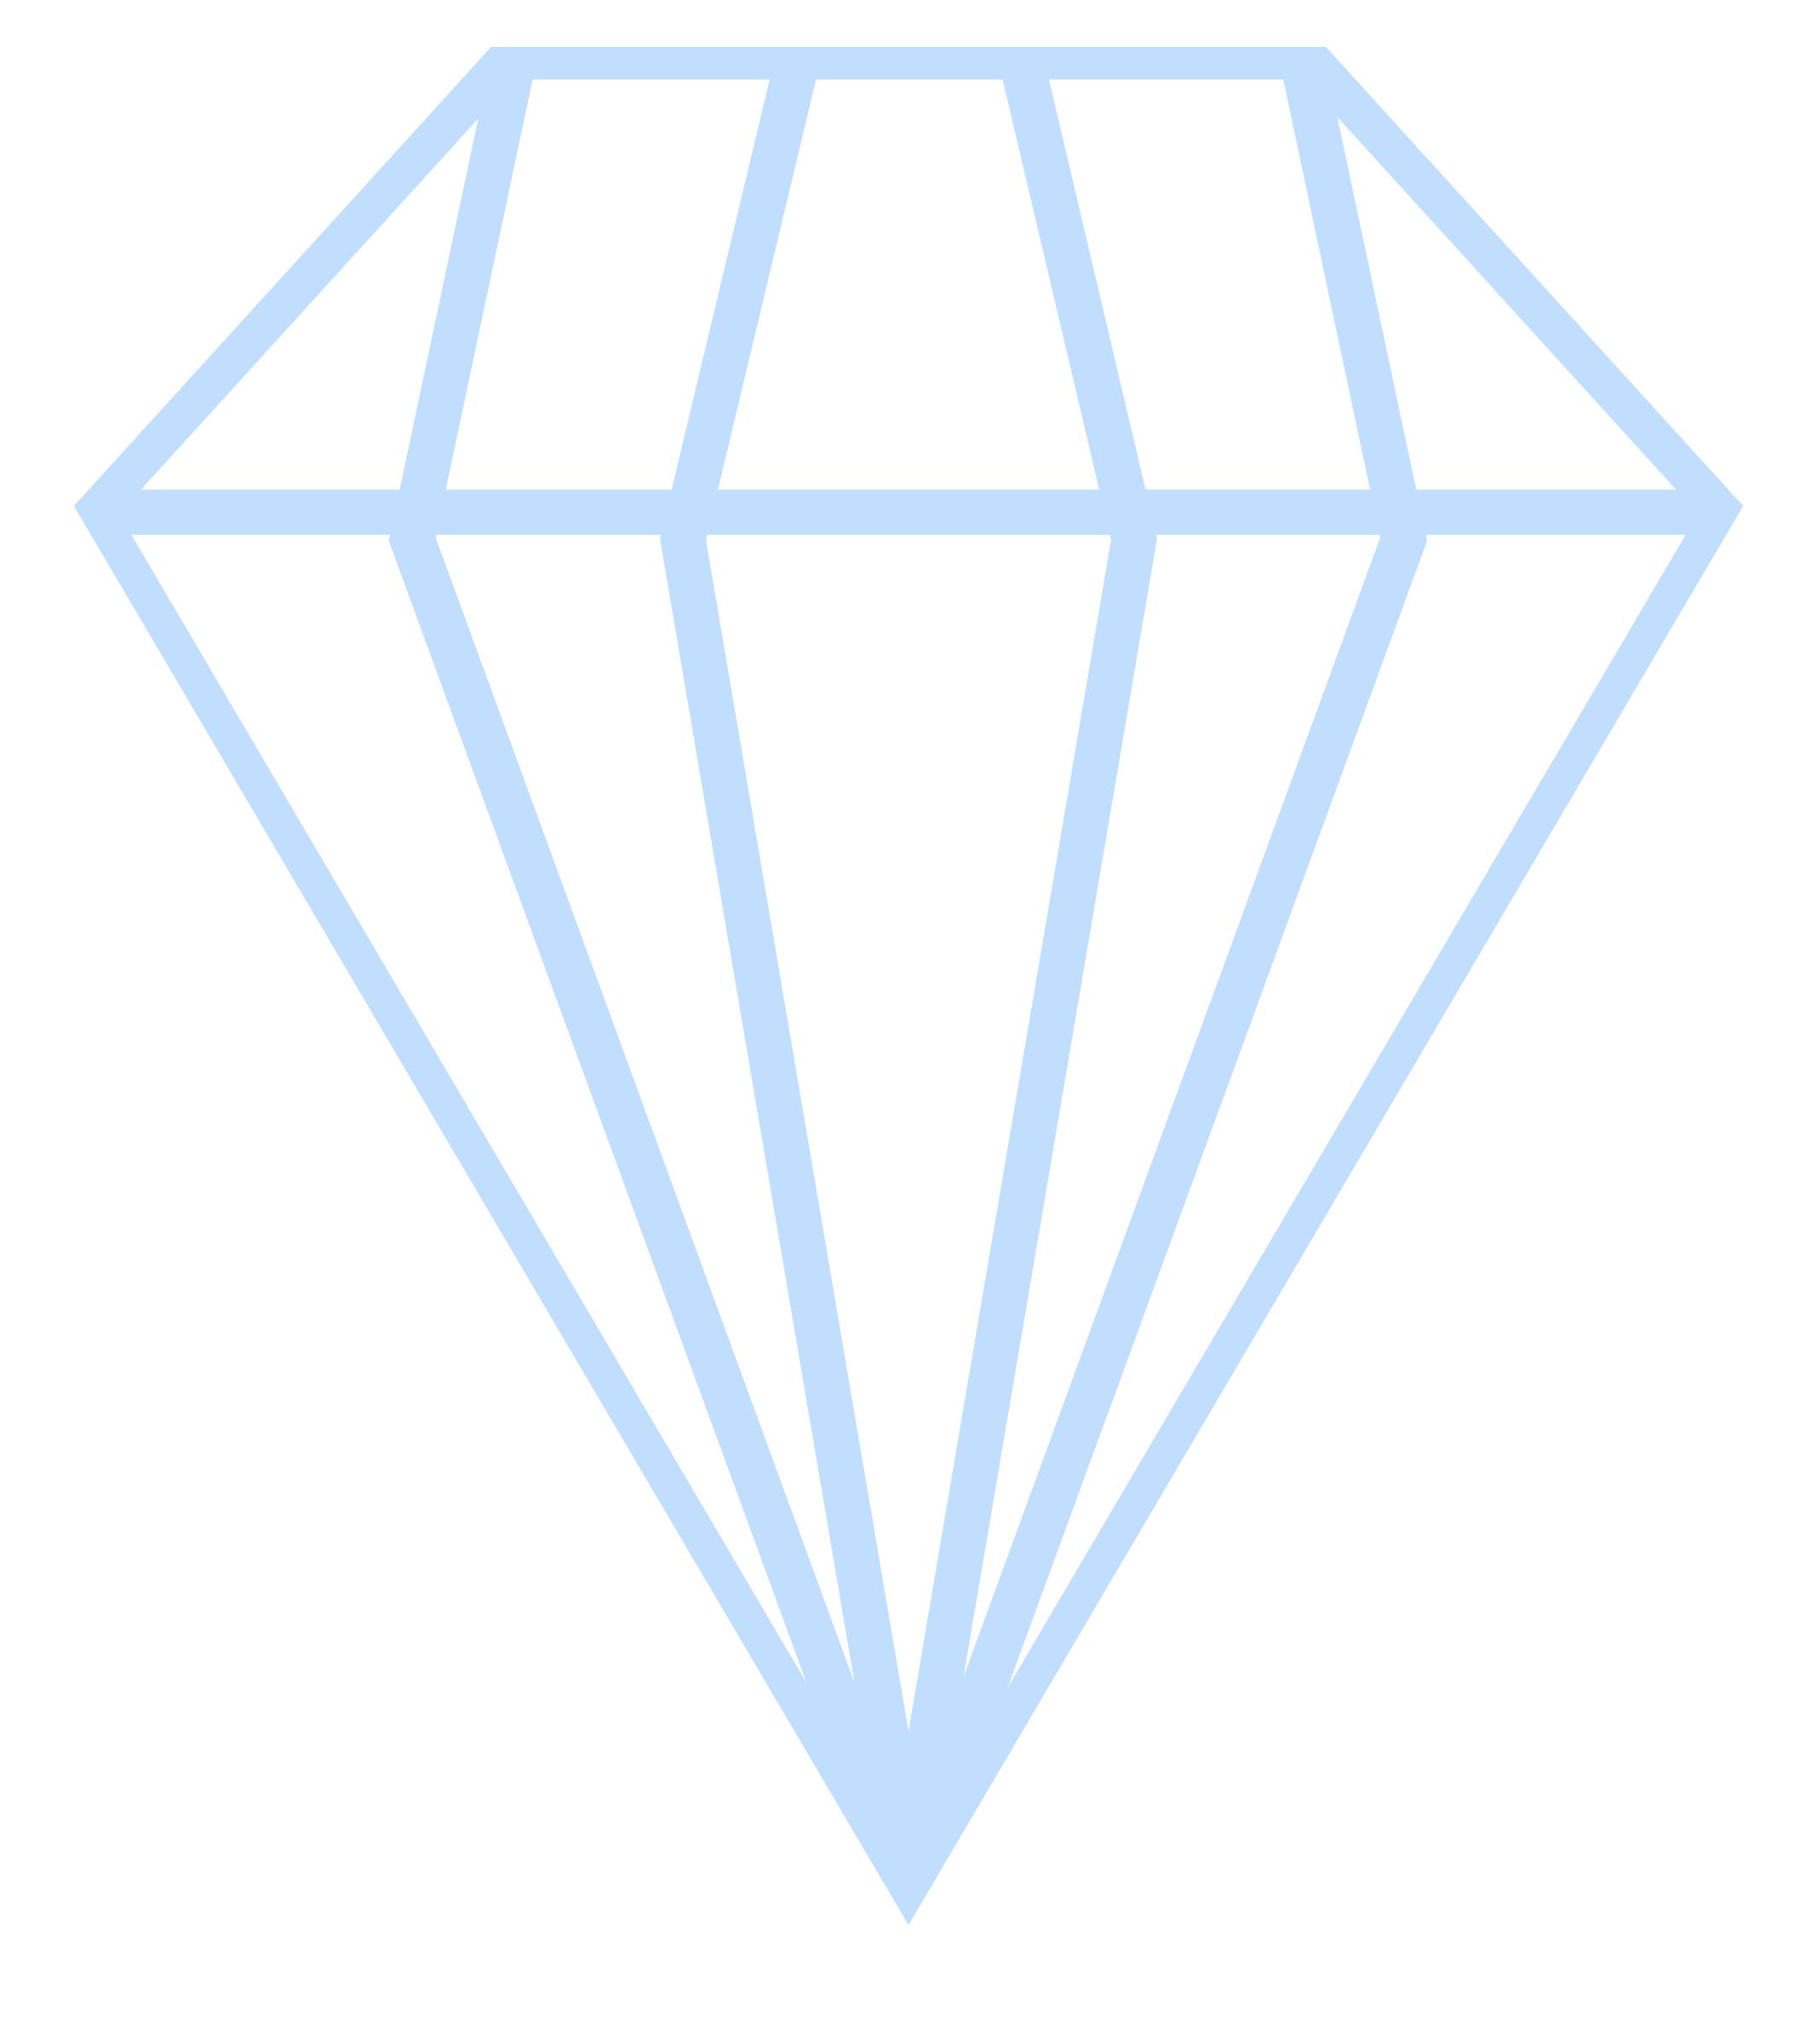 Single White Diamond PNG icons